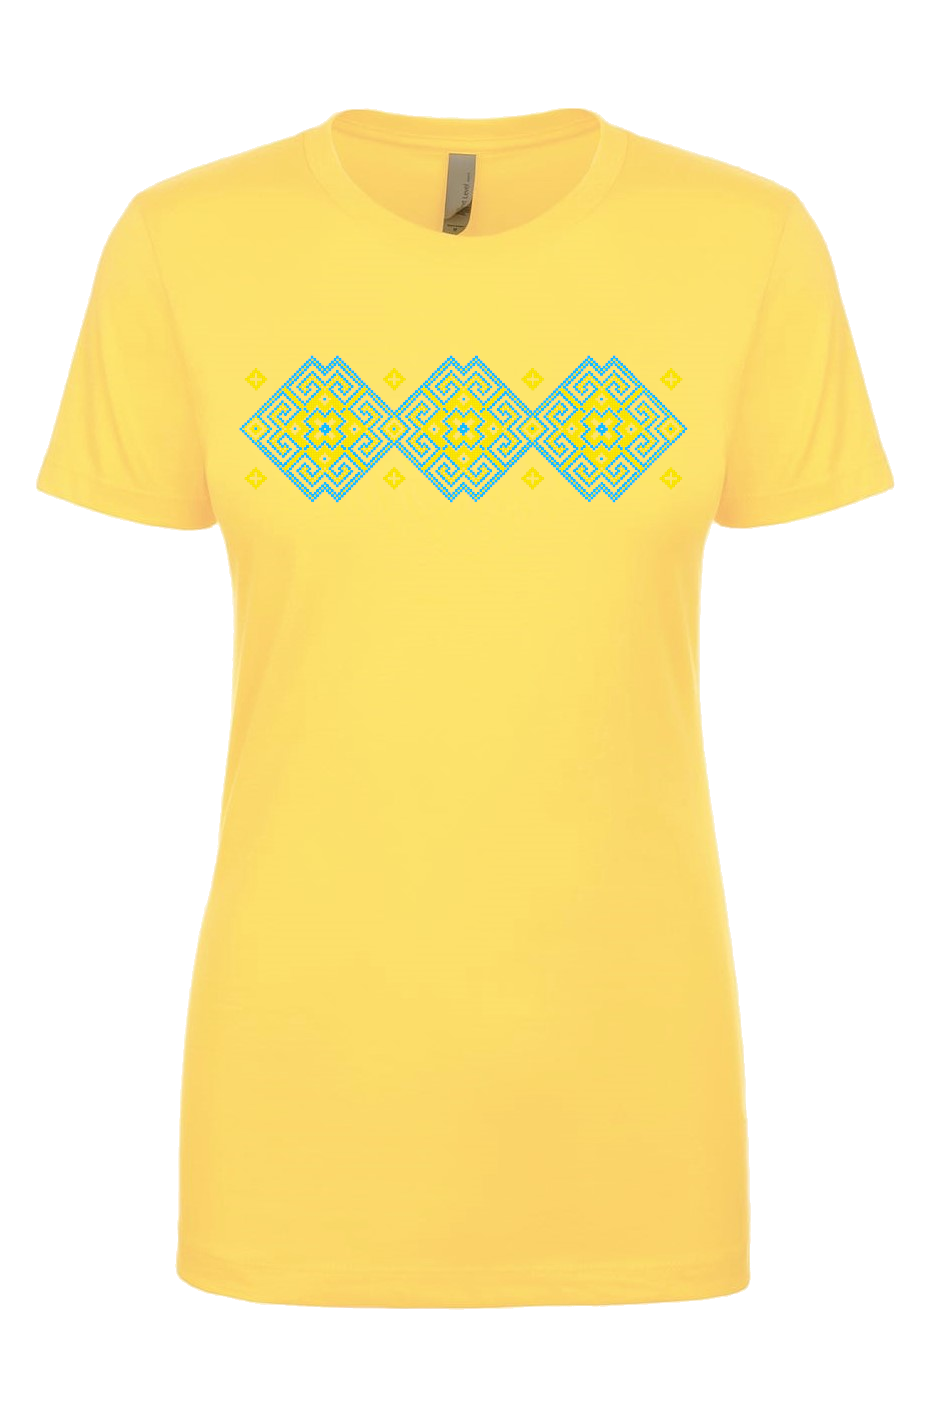 Female fit t-shirt "Vortex" yellow